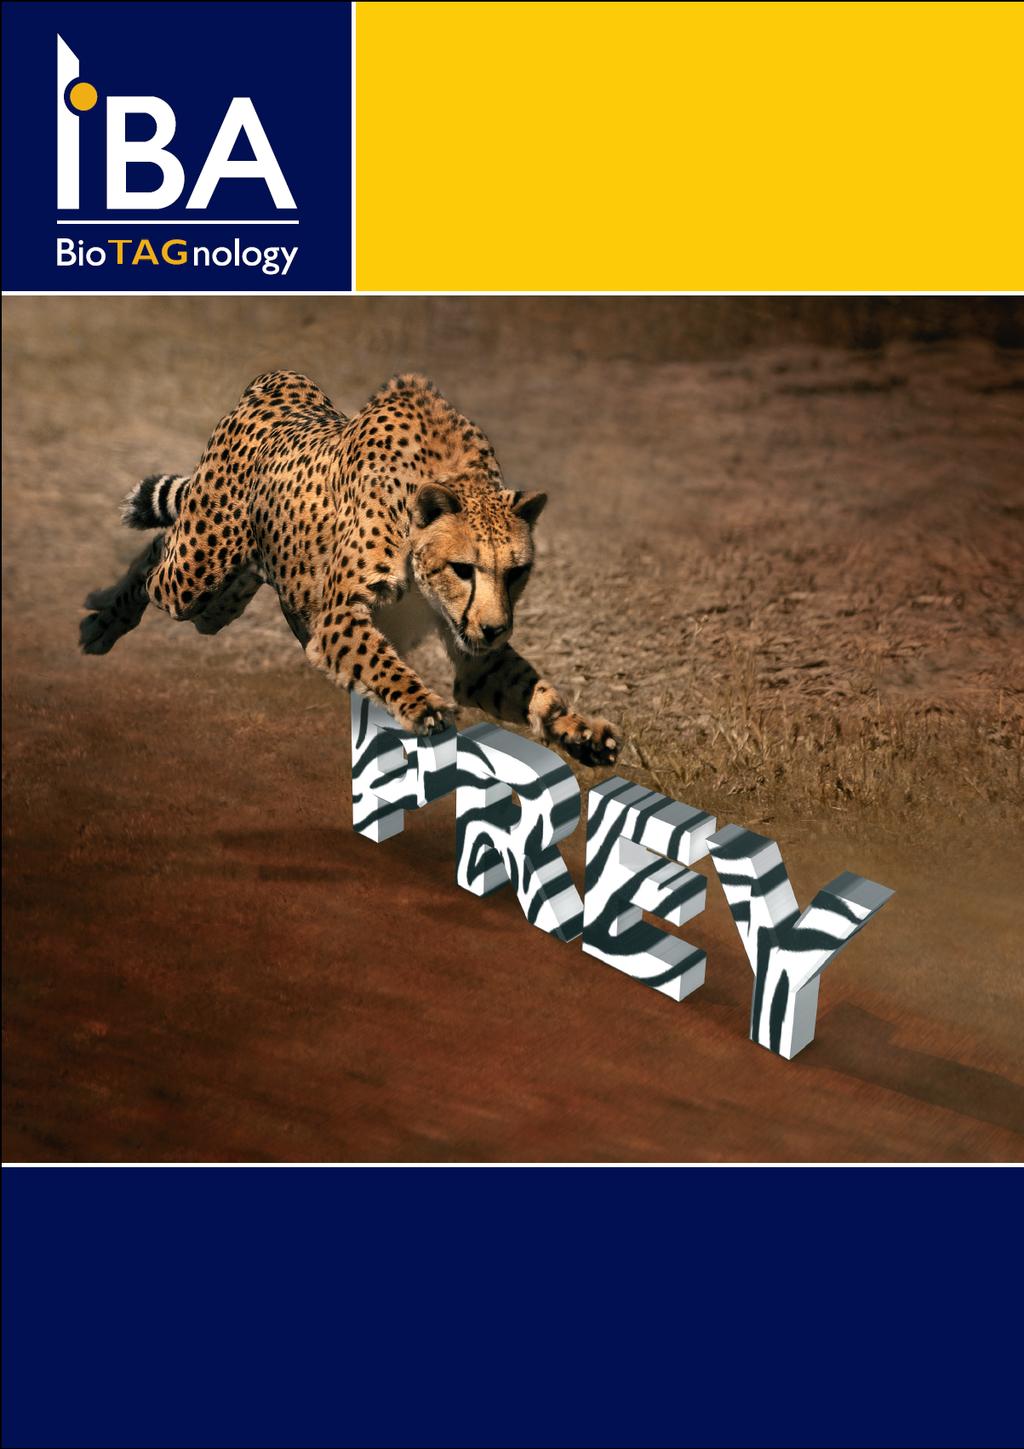 www.iba-biotagnology.